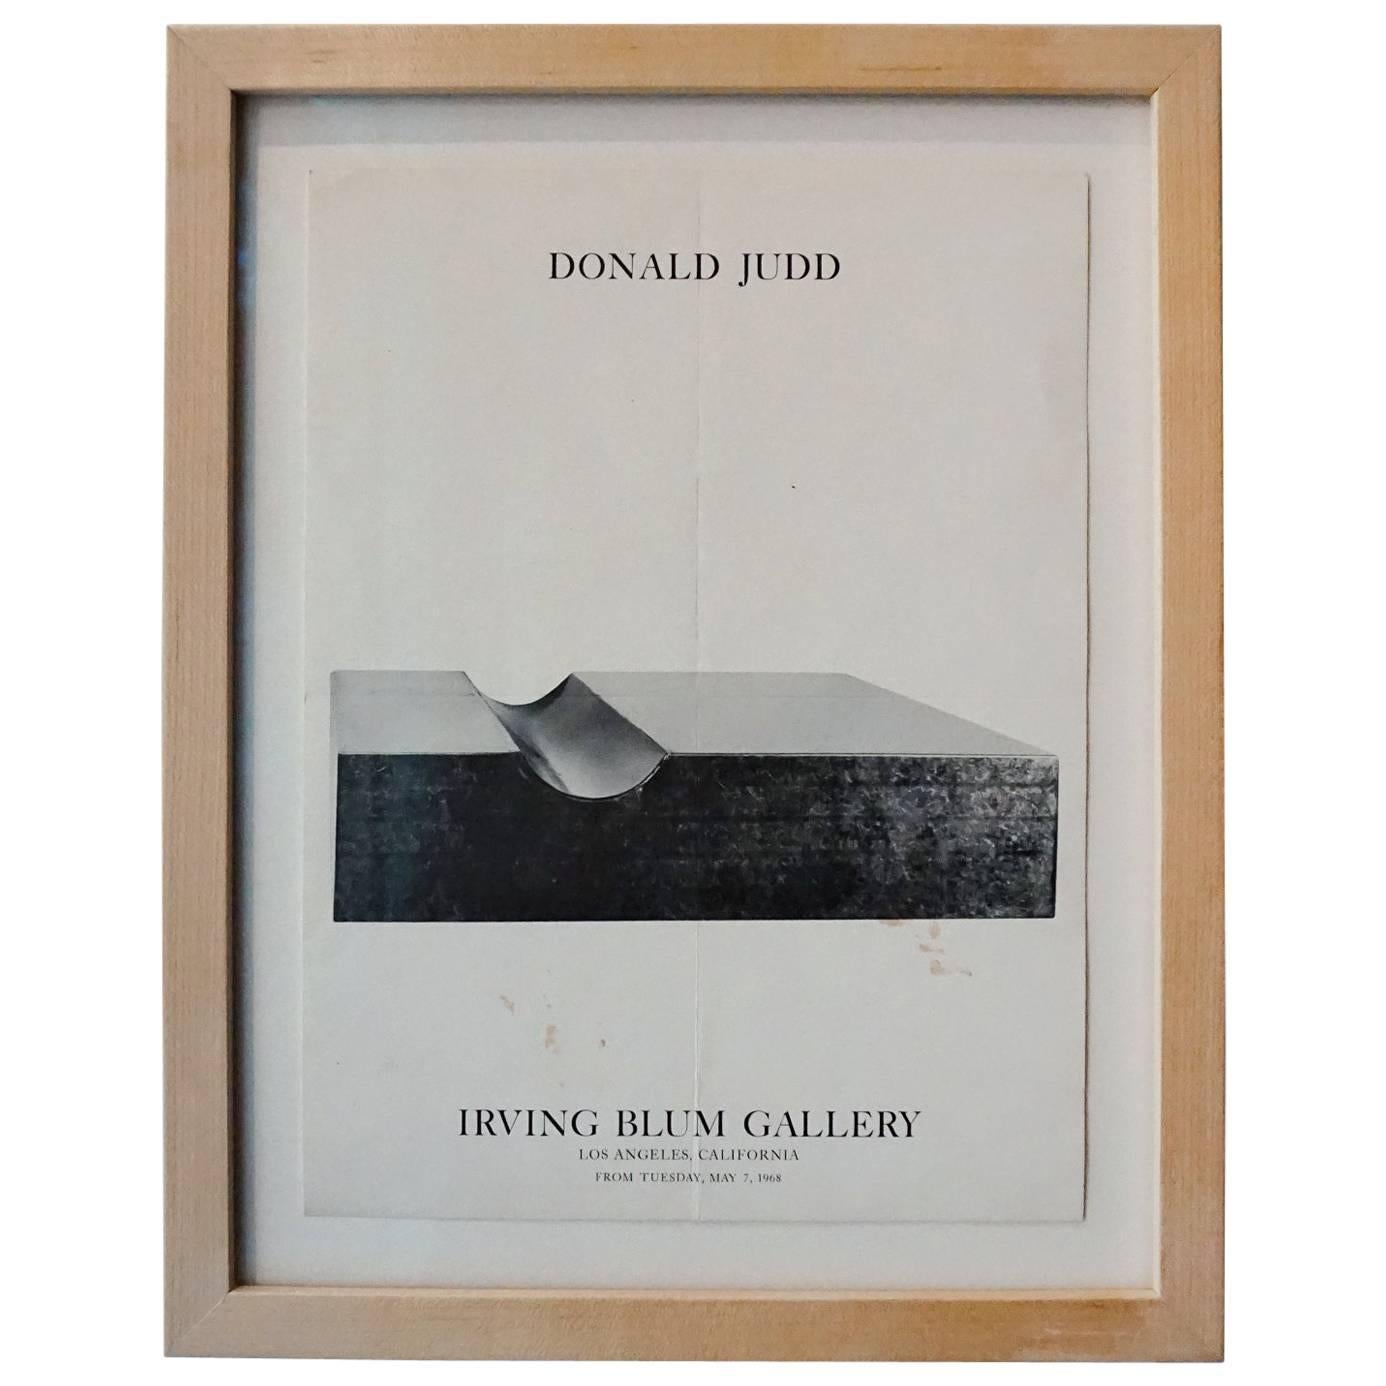 Donald Judd 1968 Irving Blum Gallery Exhibition Poster